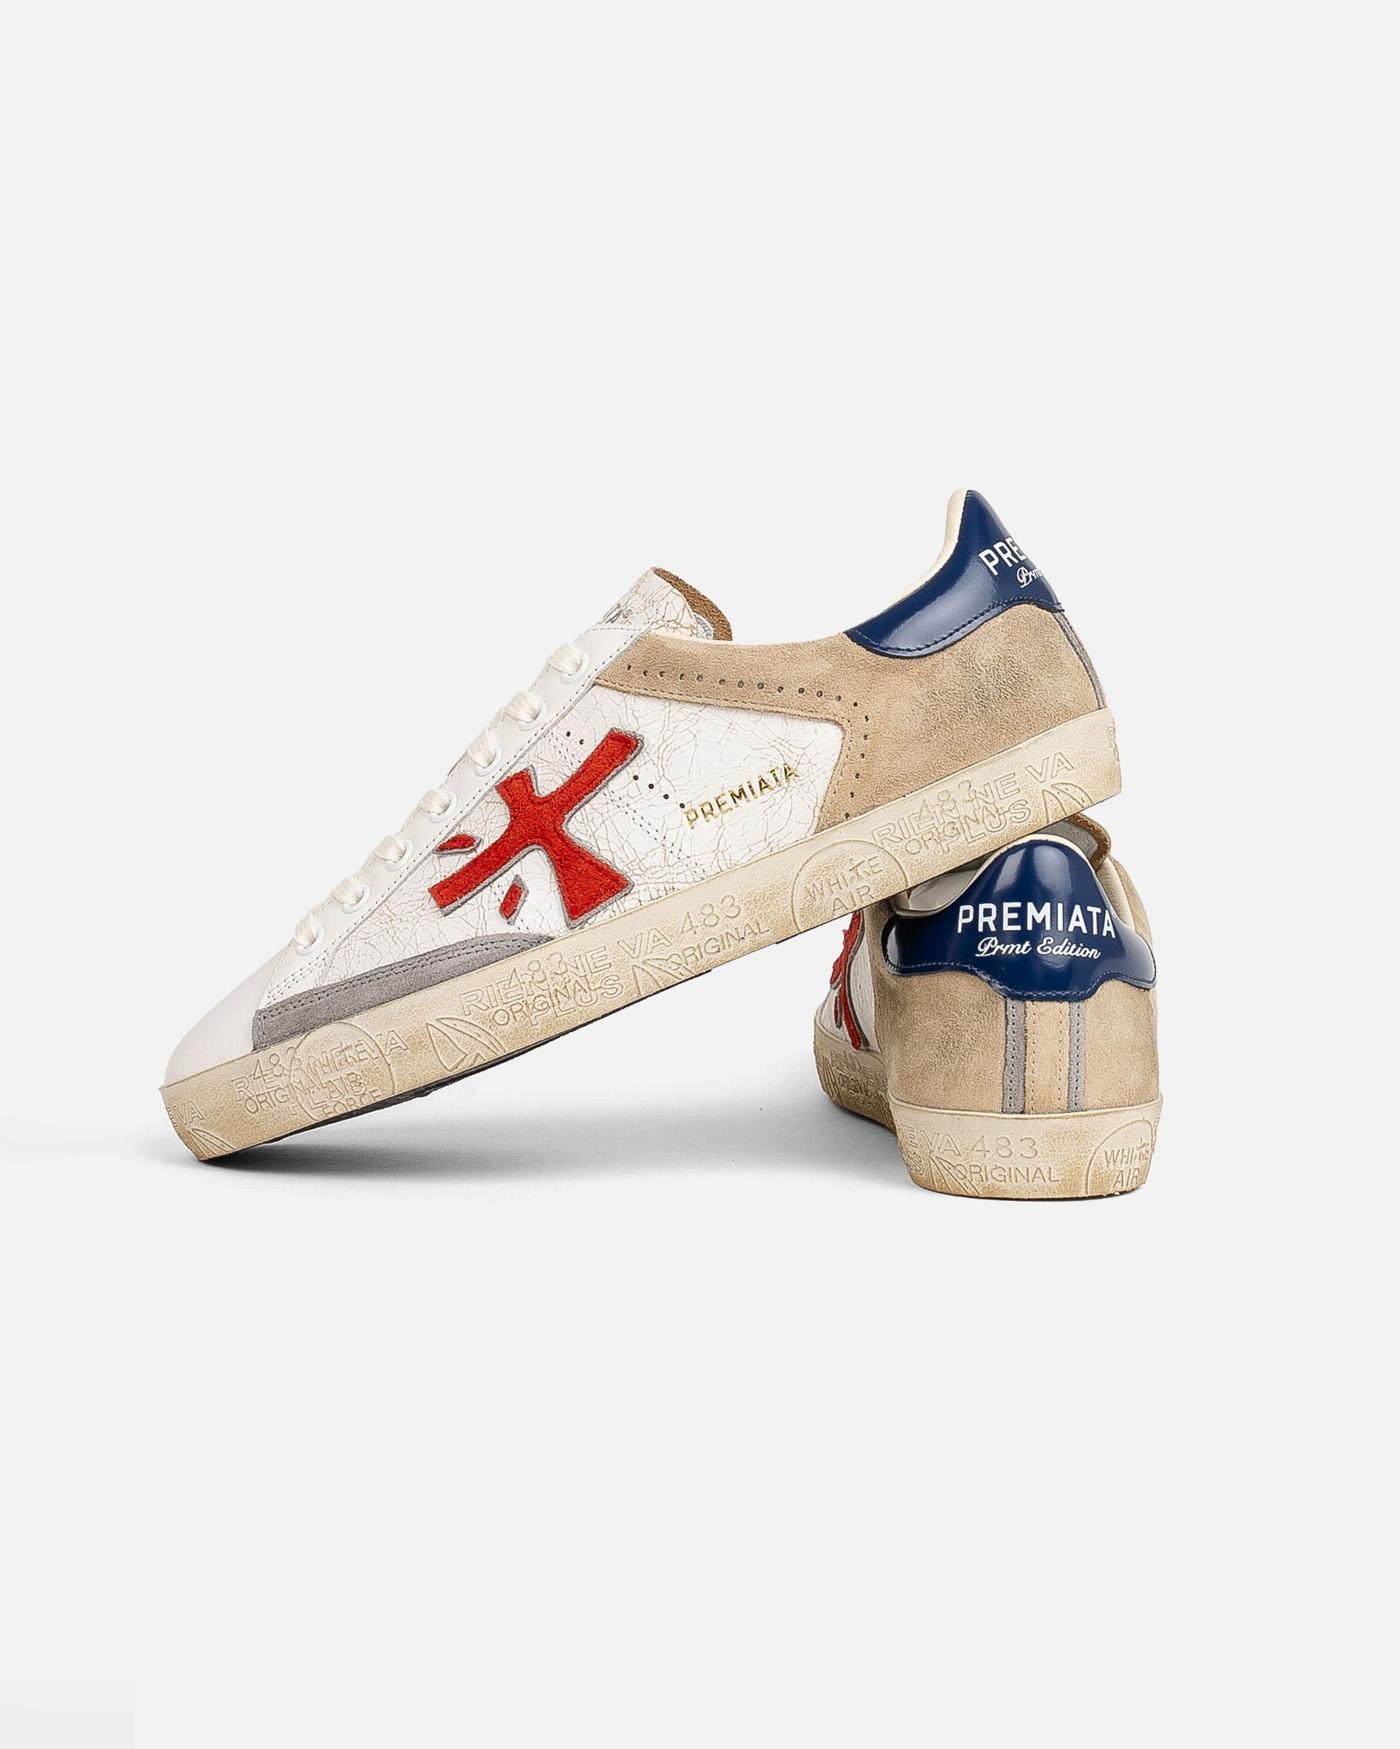 premiata-zapatillas-steven-6650-sneakers-white-blancas-5